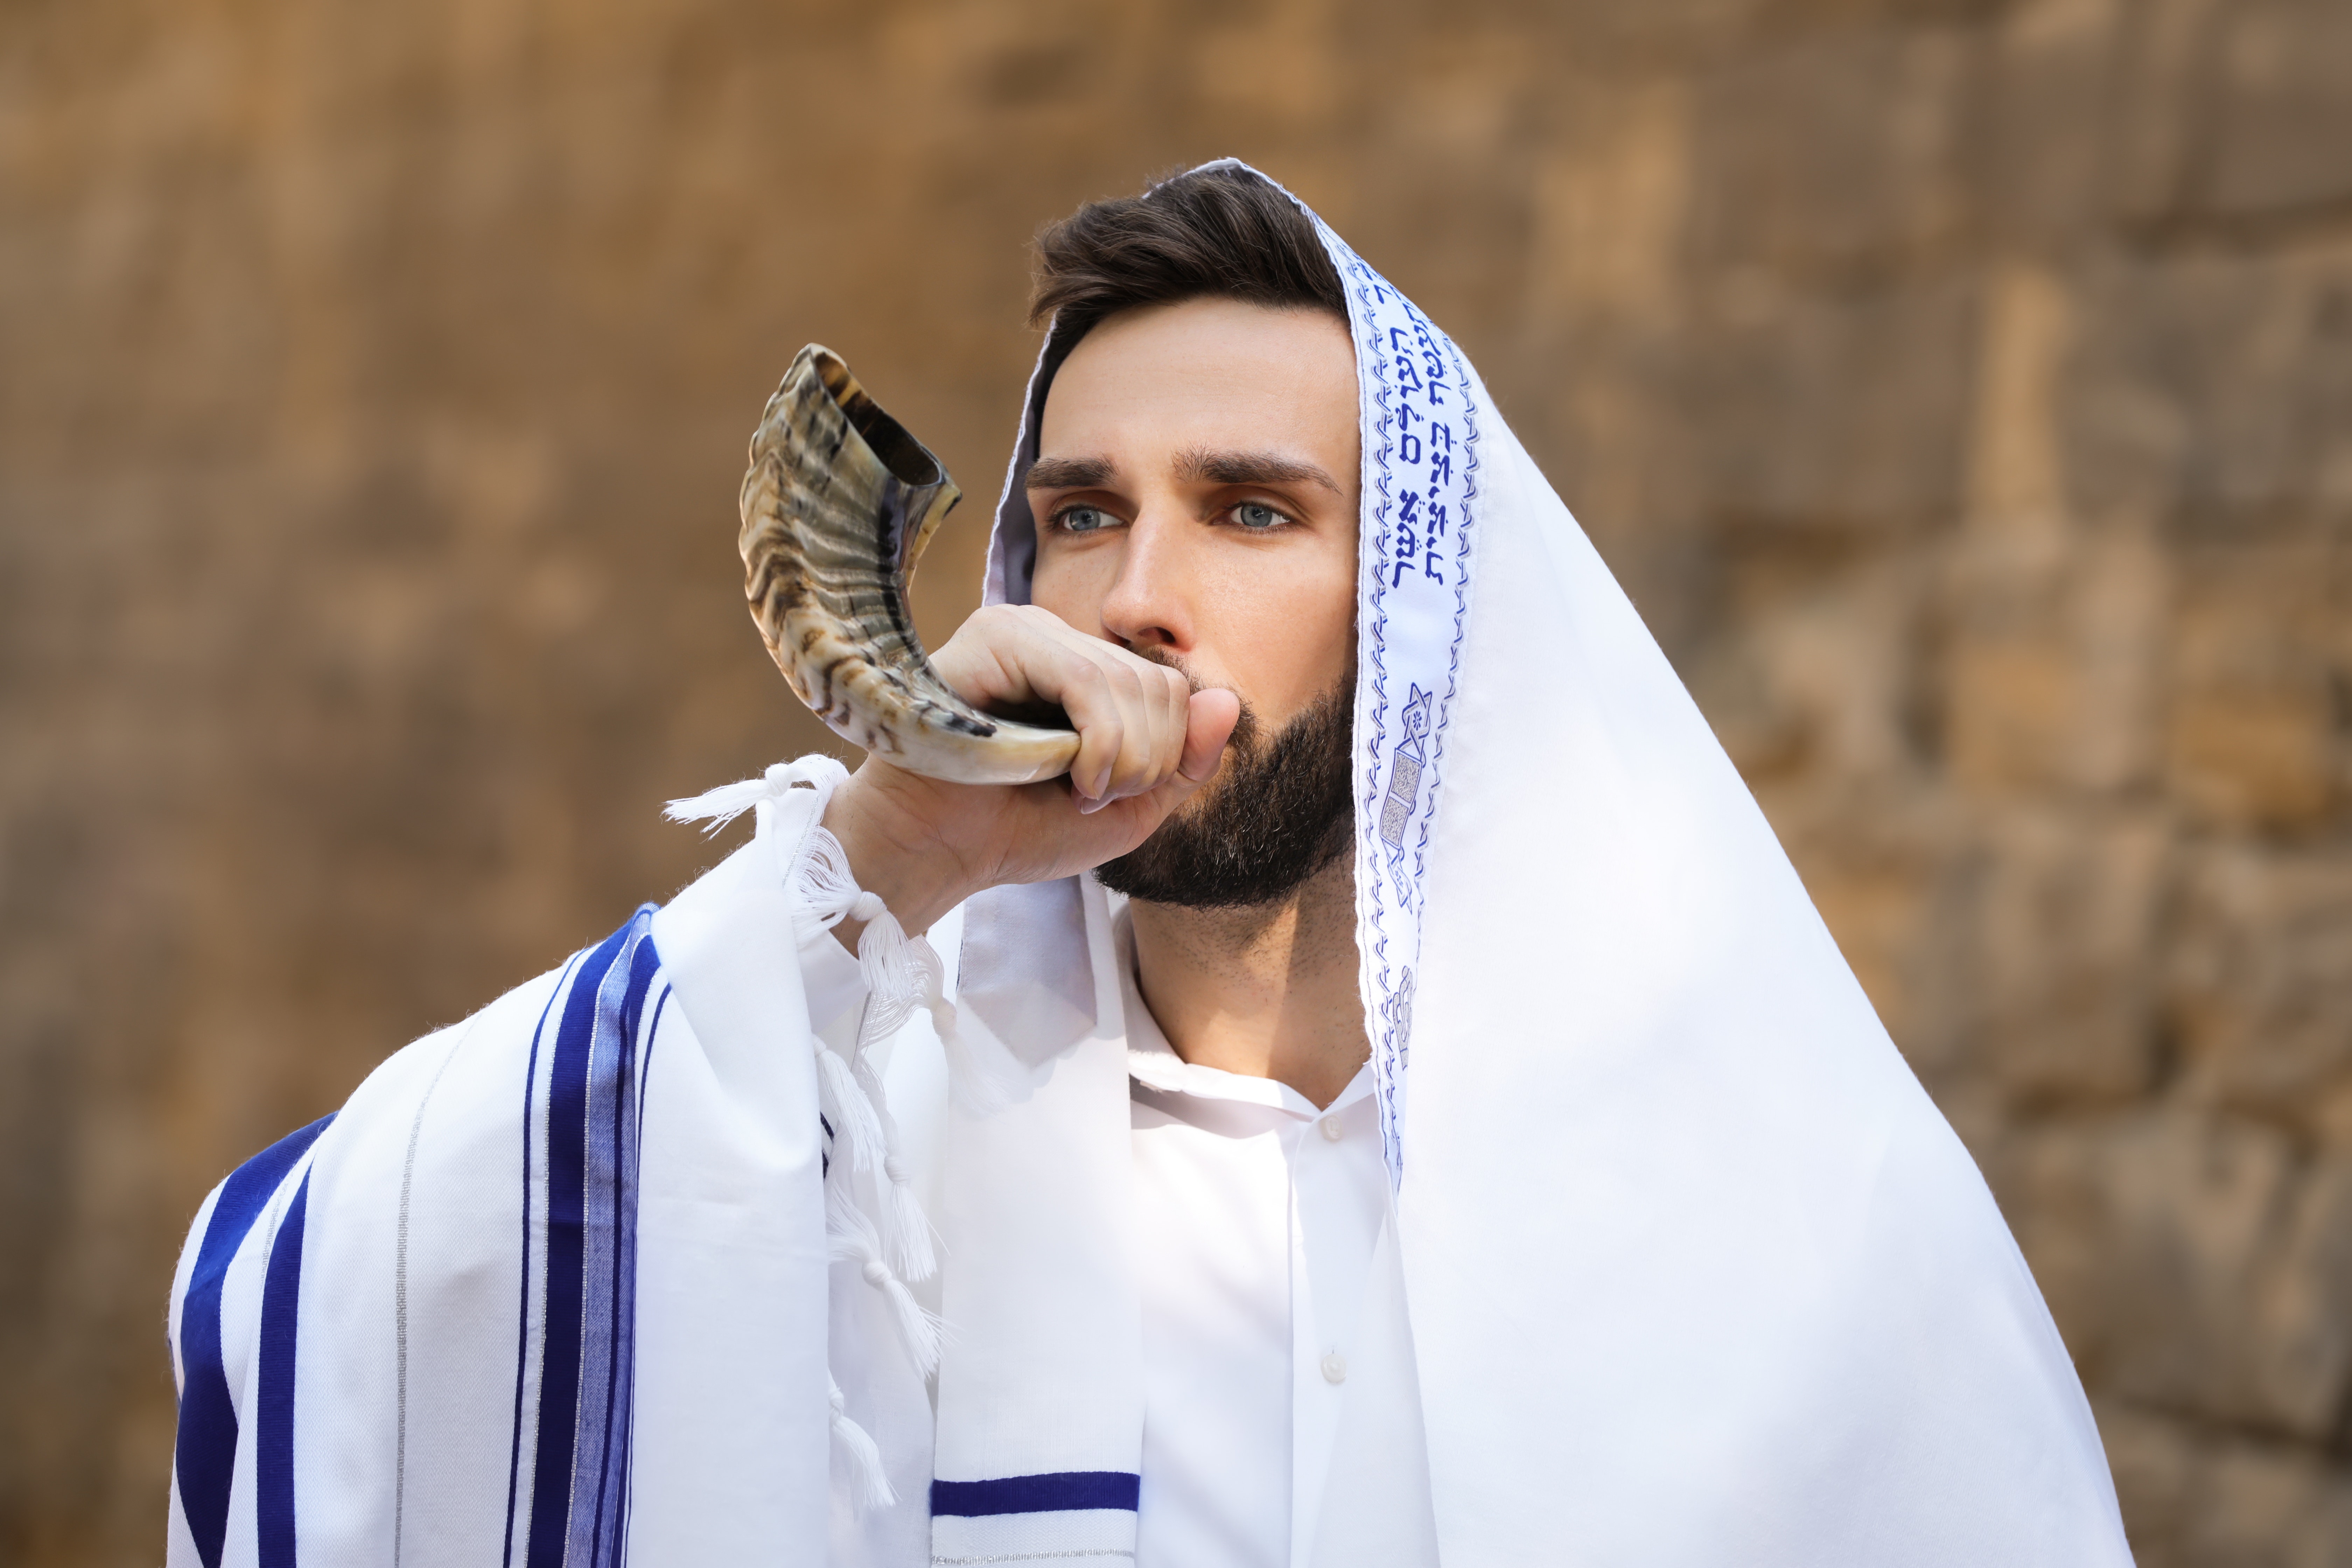 man blowing the shofar on Yom Kippur